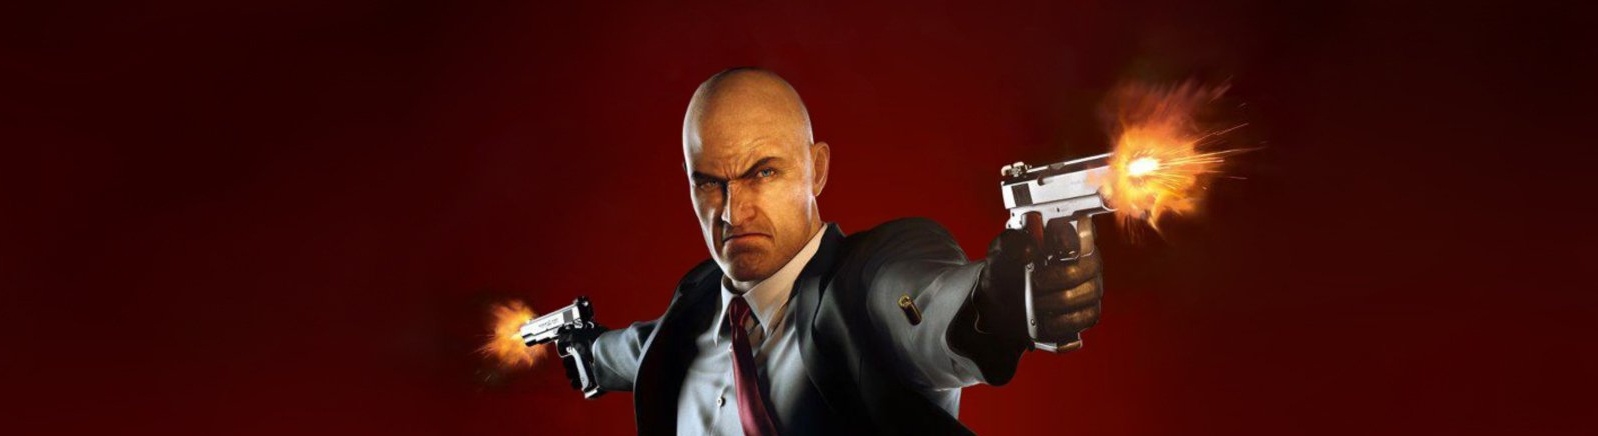 Дата выхода Hitman: Absolution  на PC, PS3 и Xbox 360 в России и во всем мире